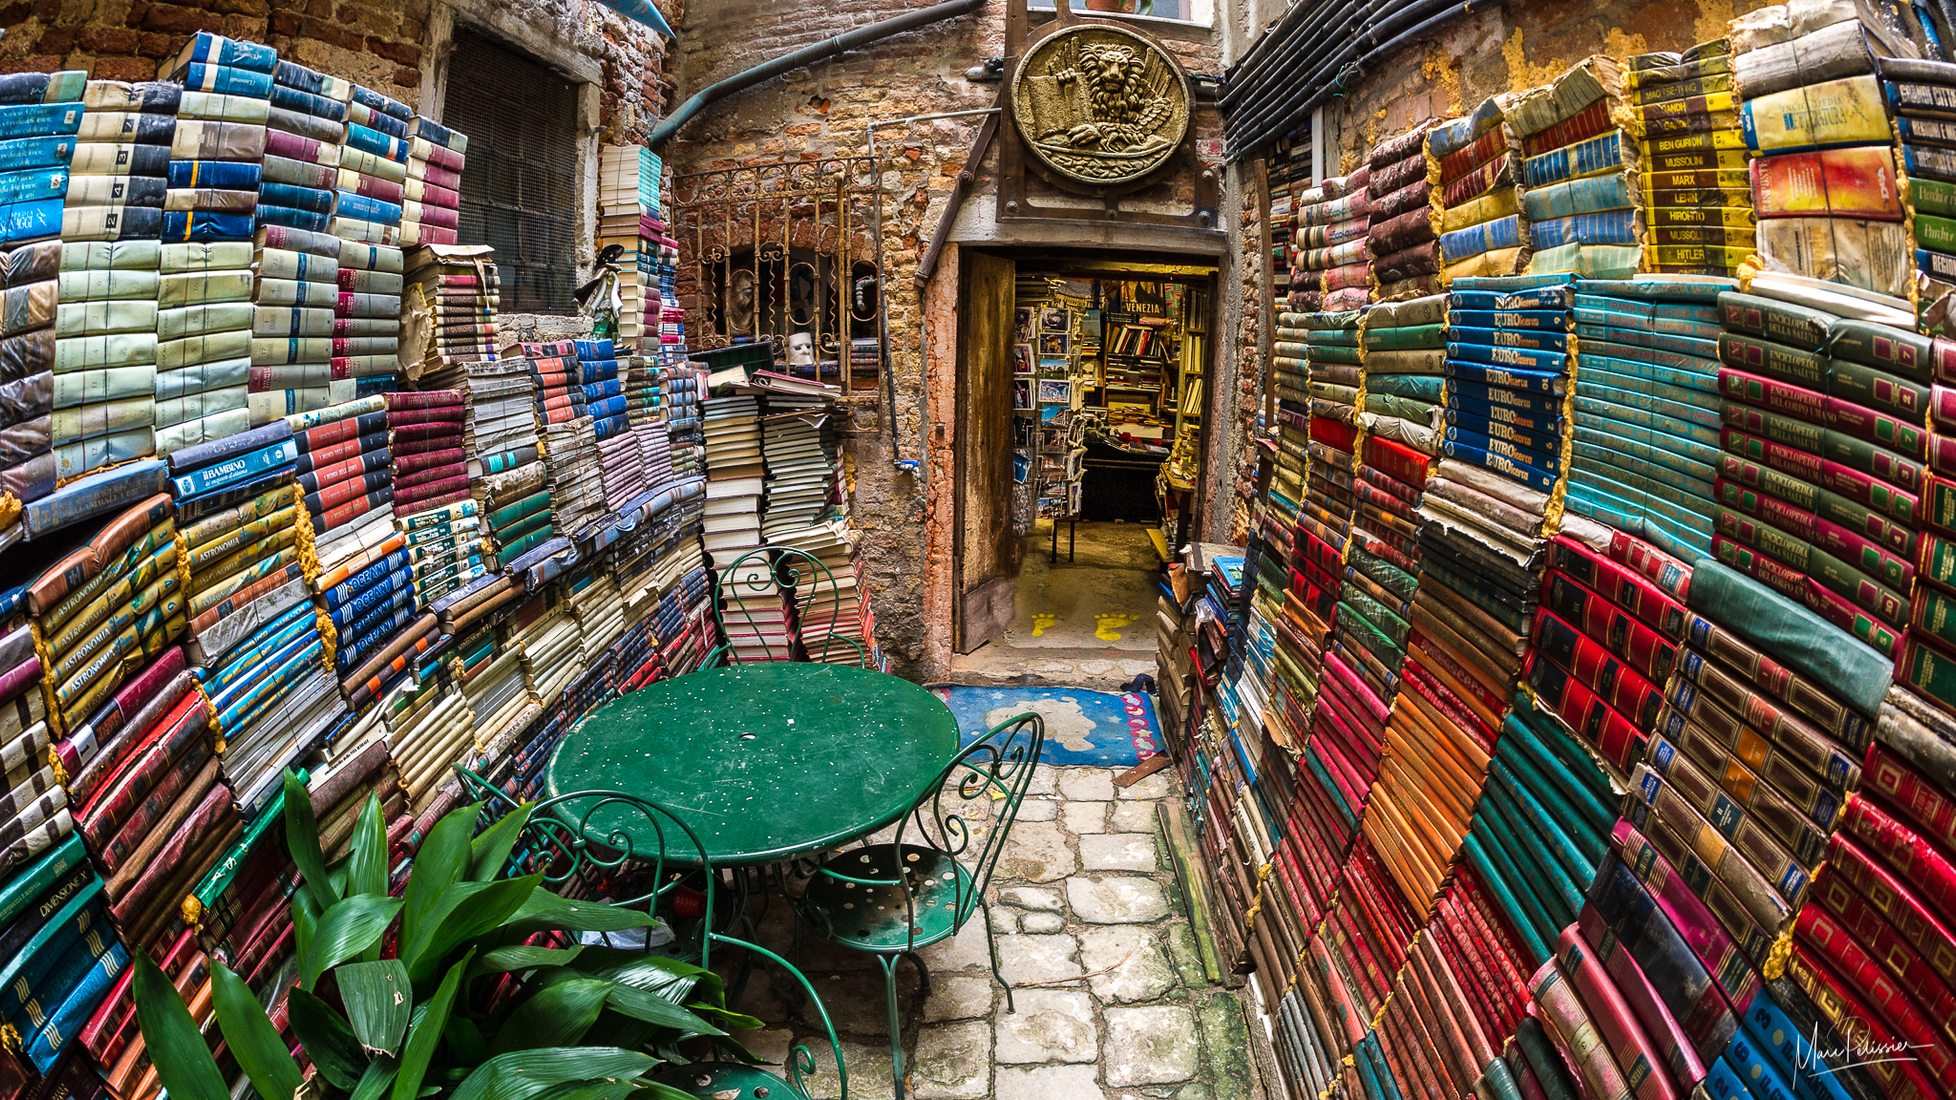 Libreria Acqua Alta, Italy